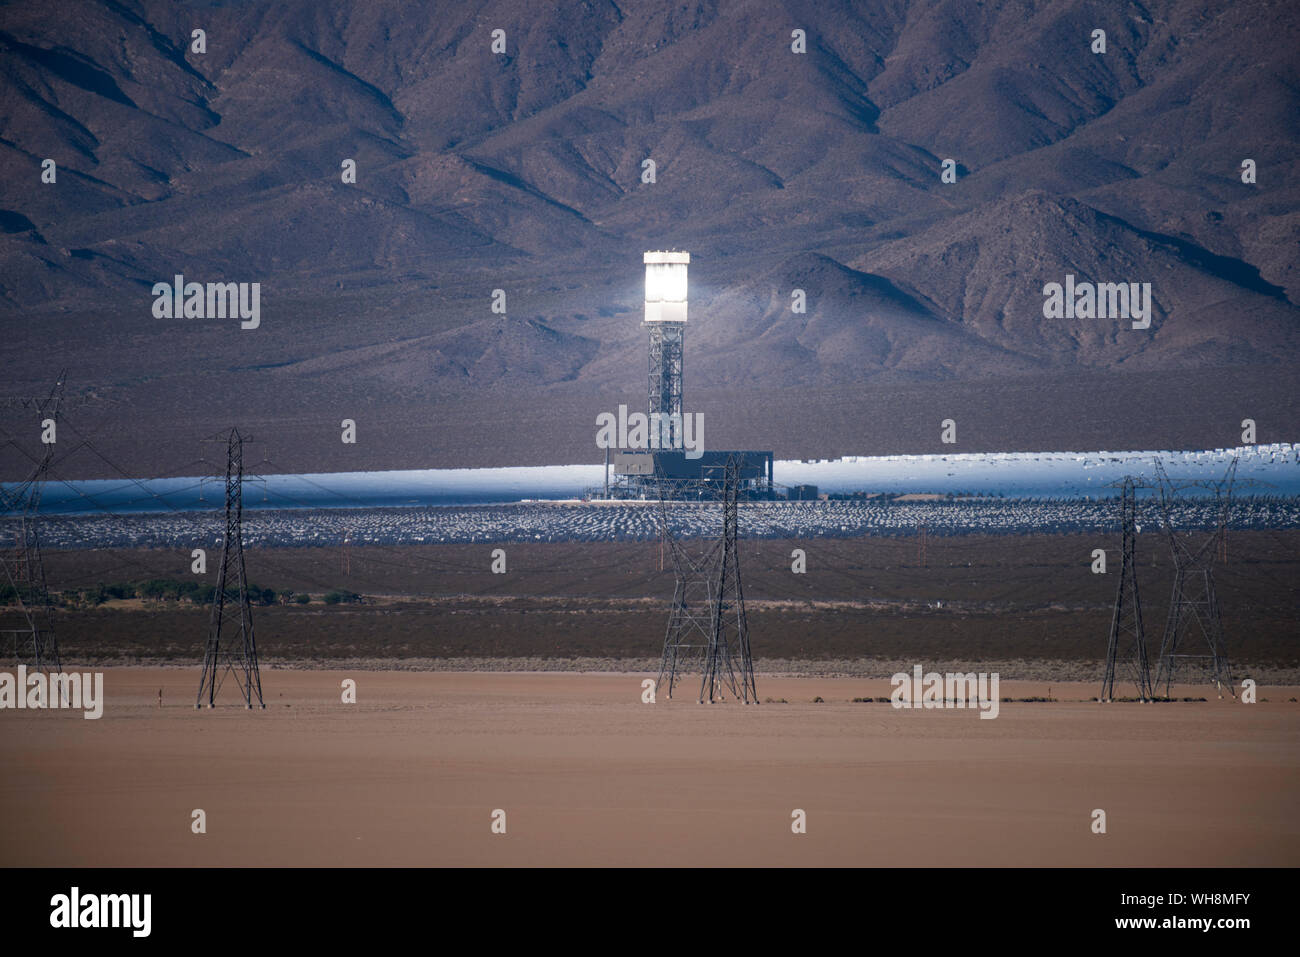 The Ivanpah Solar Electric Generating Station generates electricity in the Mojave Desert in San Bernardino County, California Stock Photo